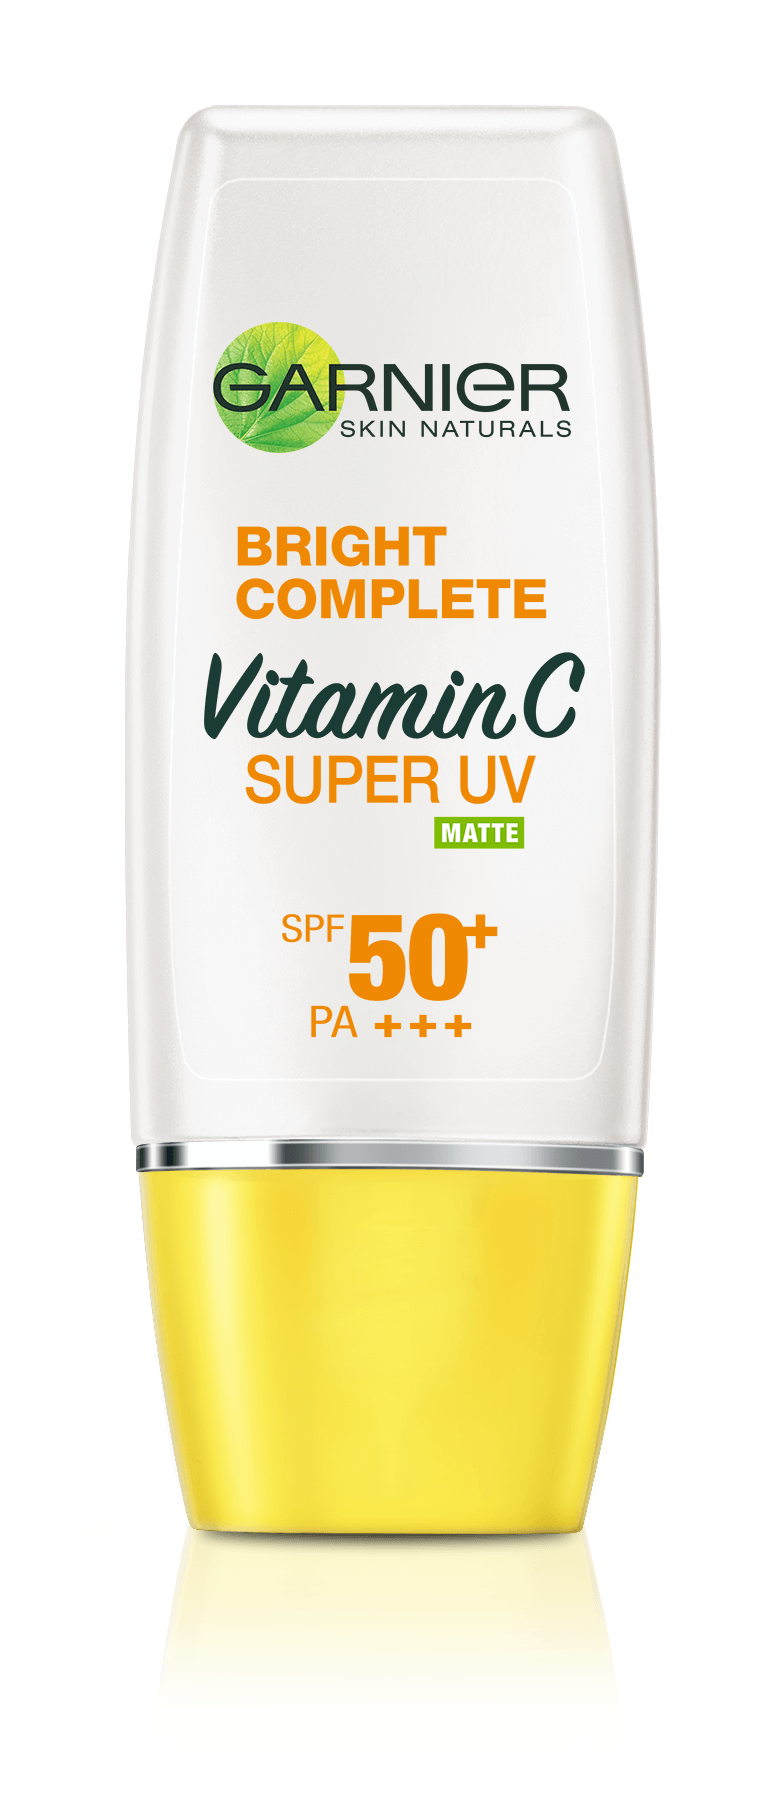 Sun Protection Power Couple: Vitamin C and Sunscreen